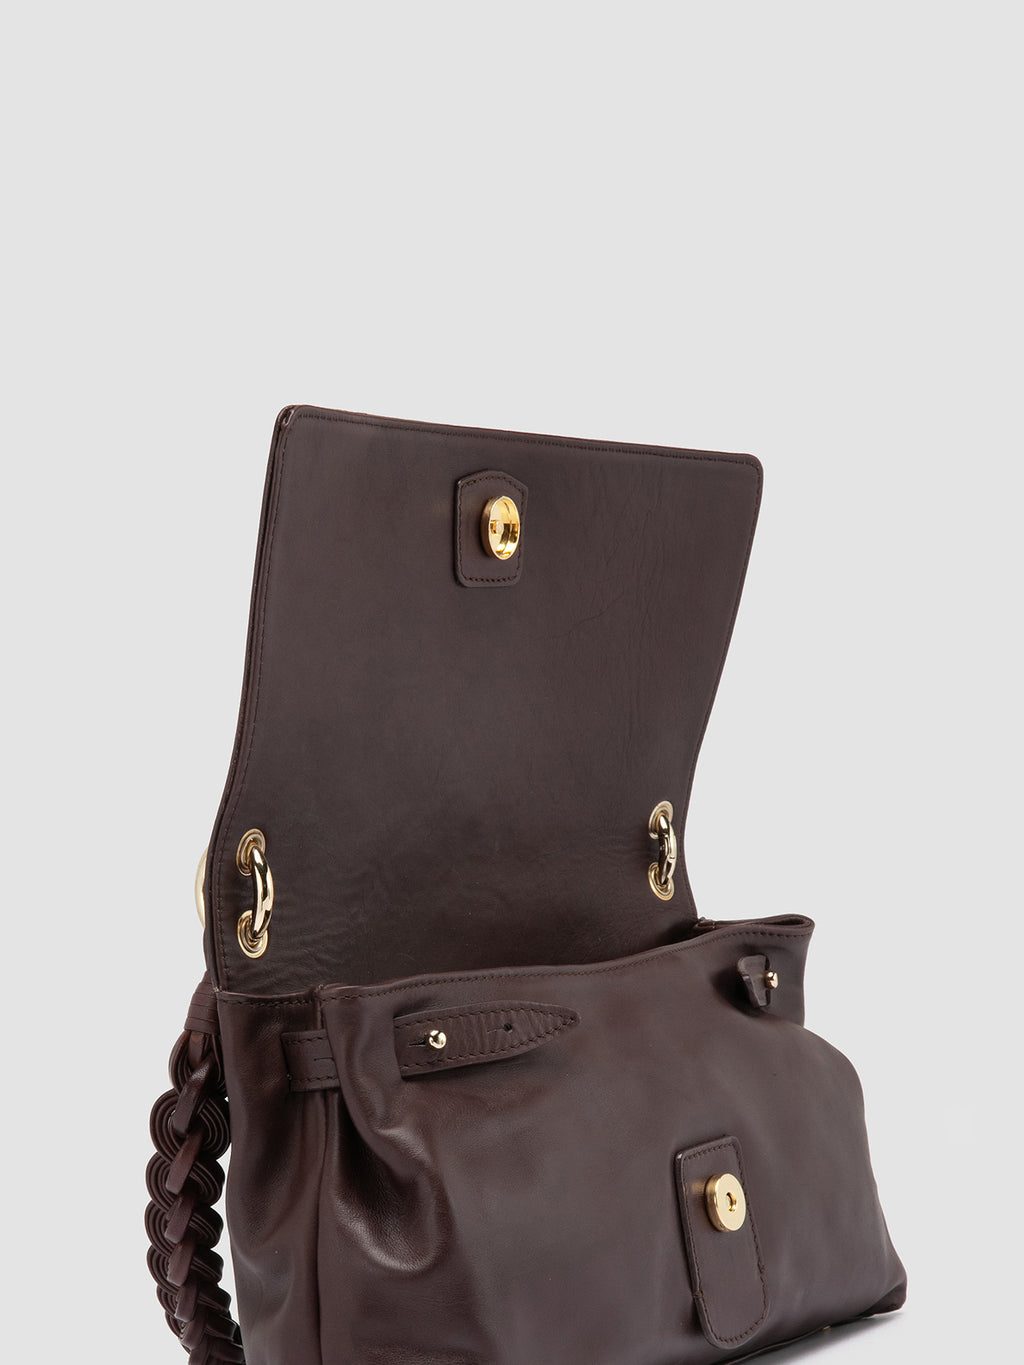 NOLITA WOVEN 212 - Burgundy Nappa Leather Shoulder Bag Officine Creative - 2